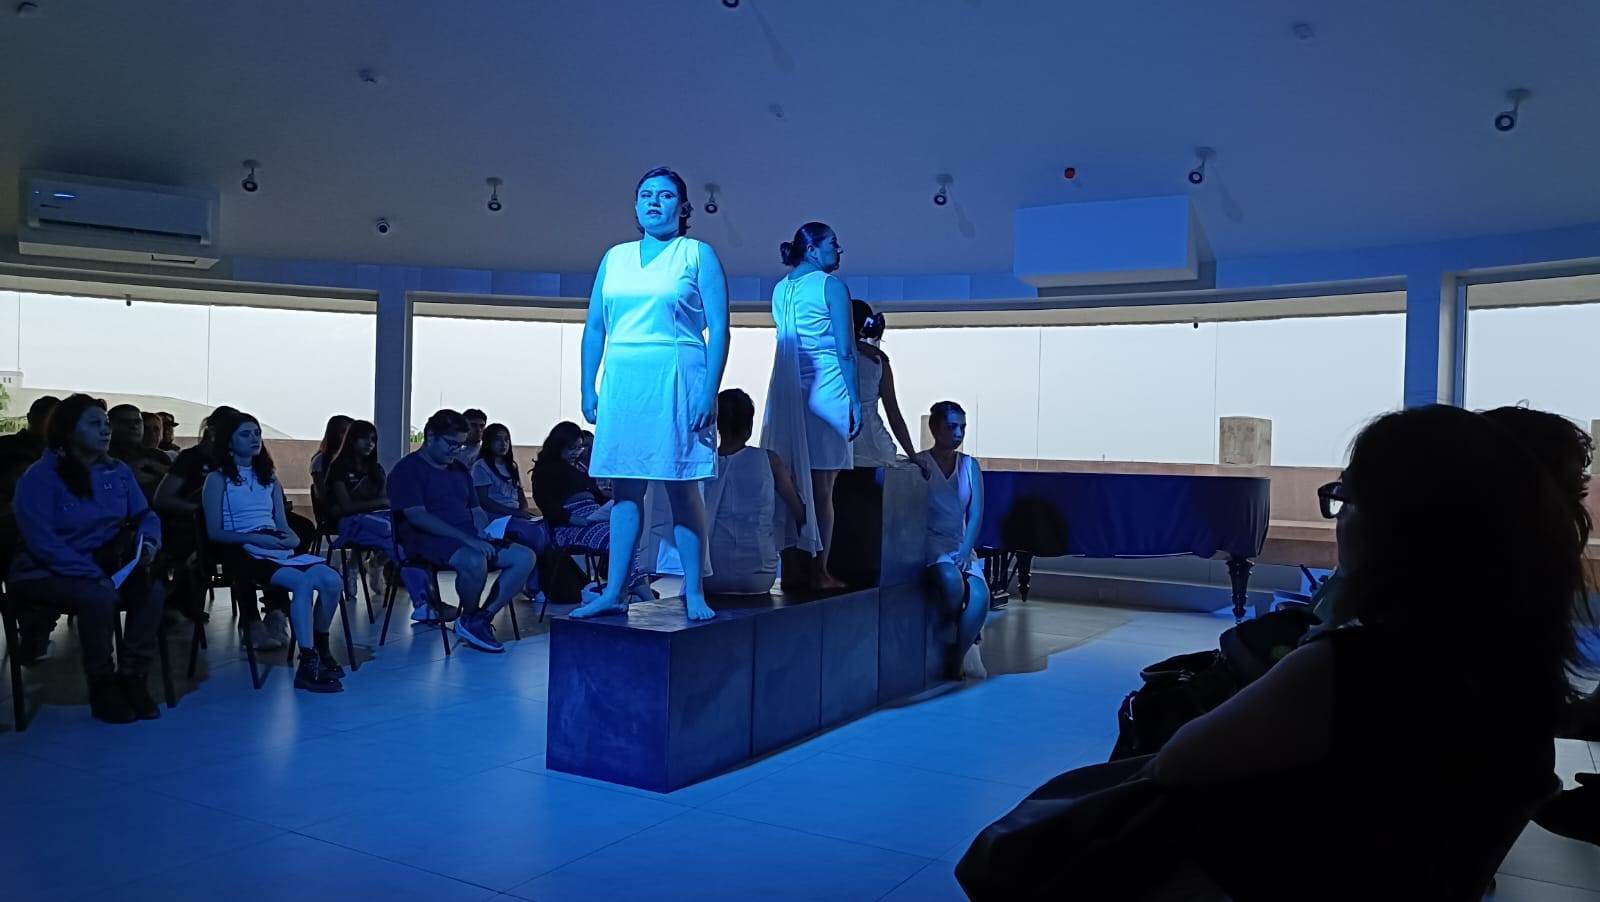 Presenta Museo Pape obra de teatro ‘Icaria’